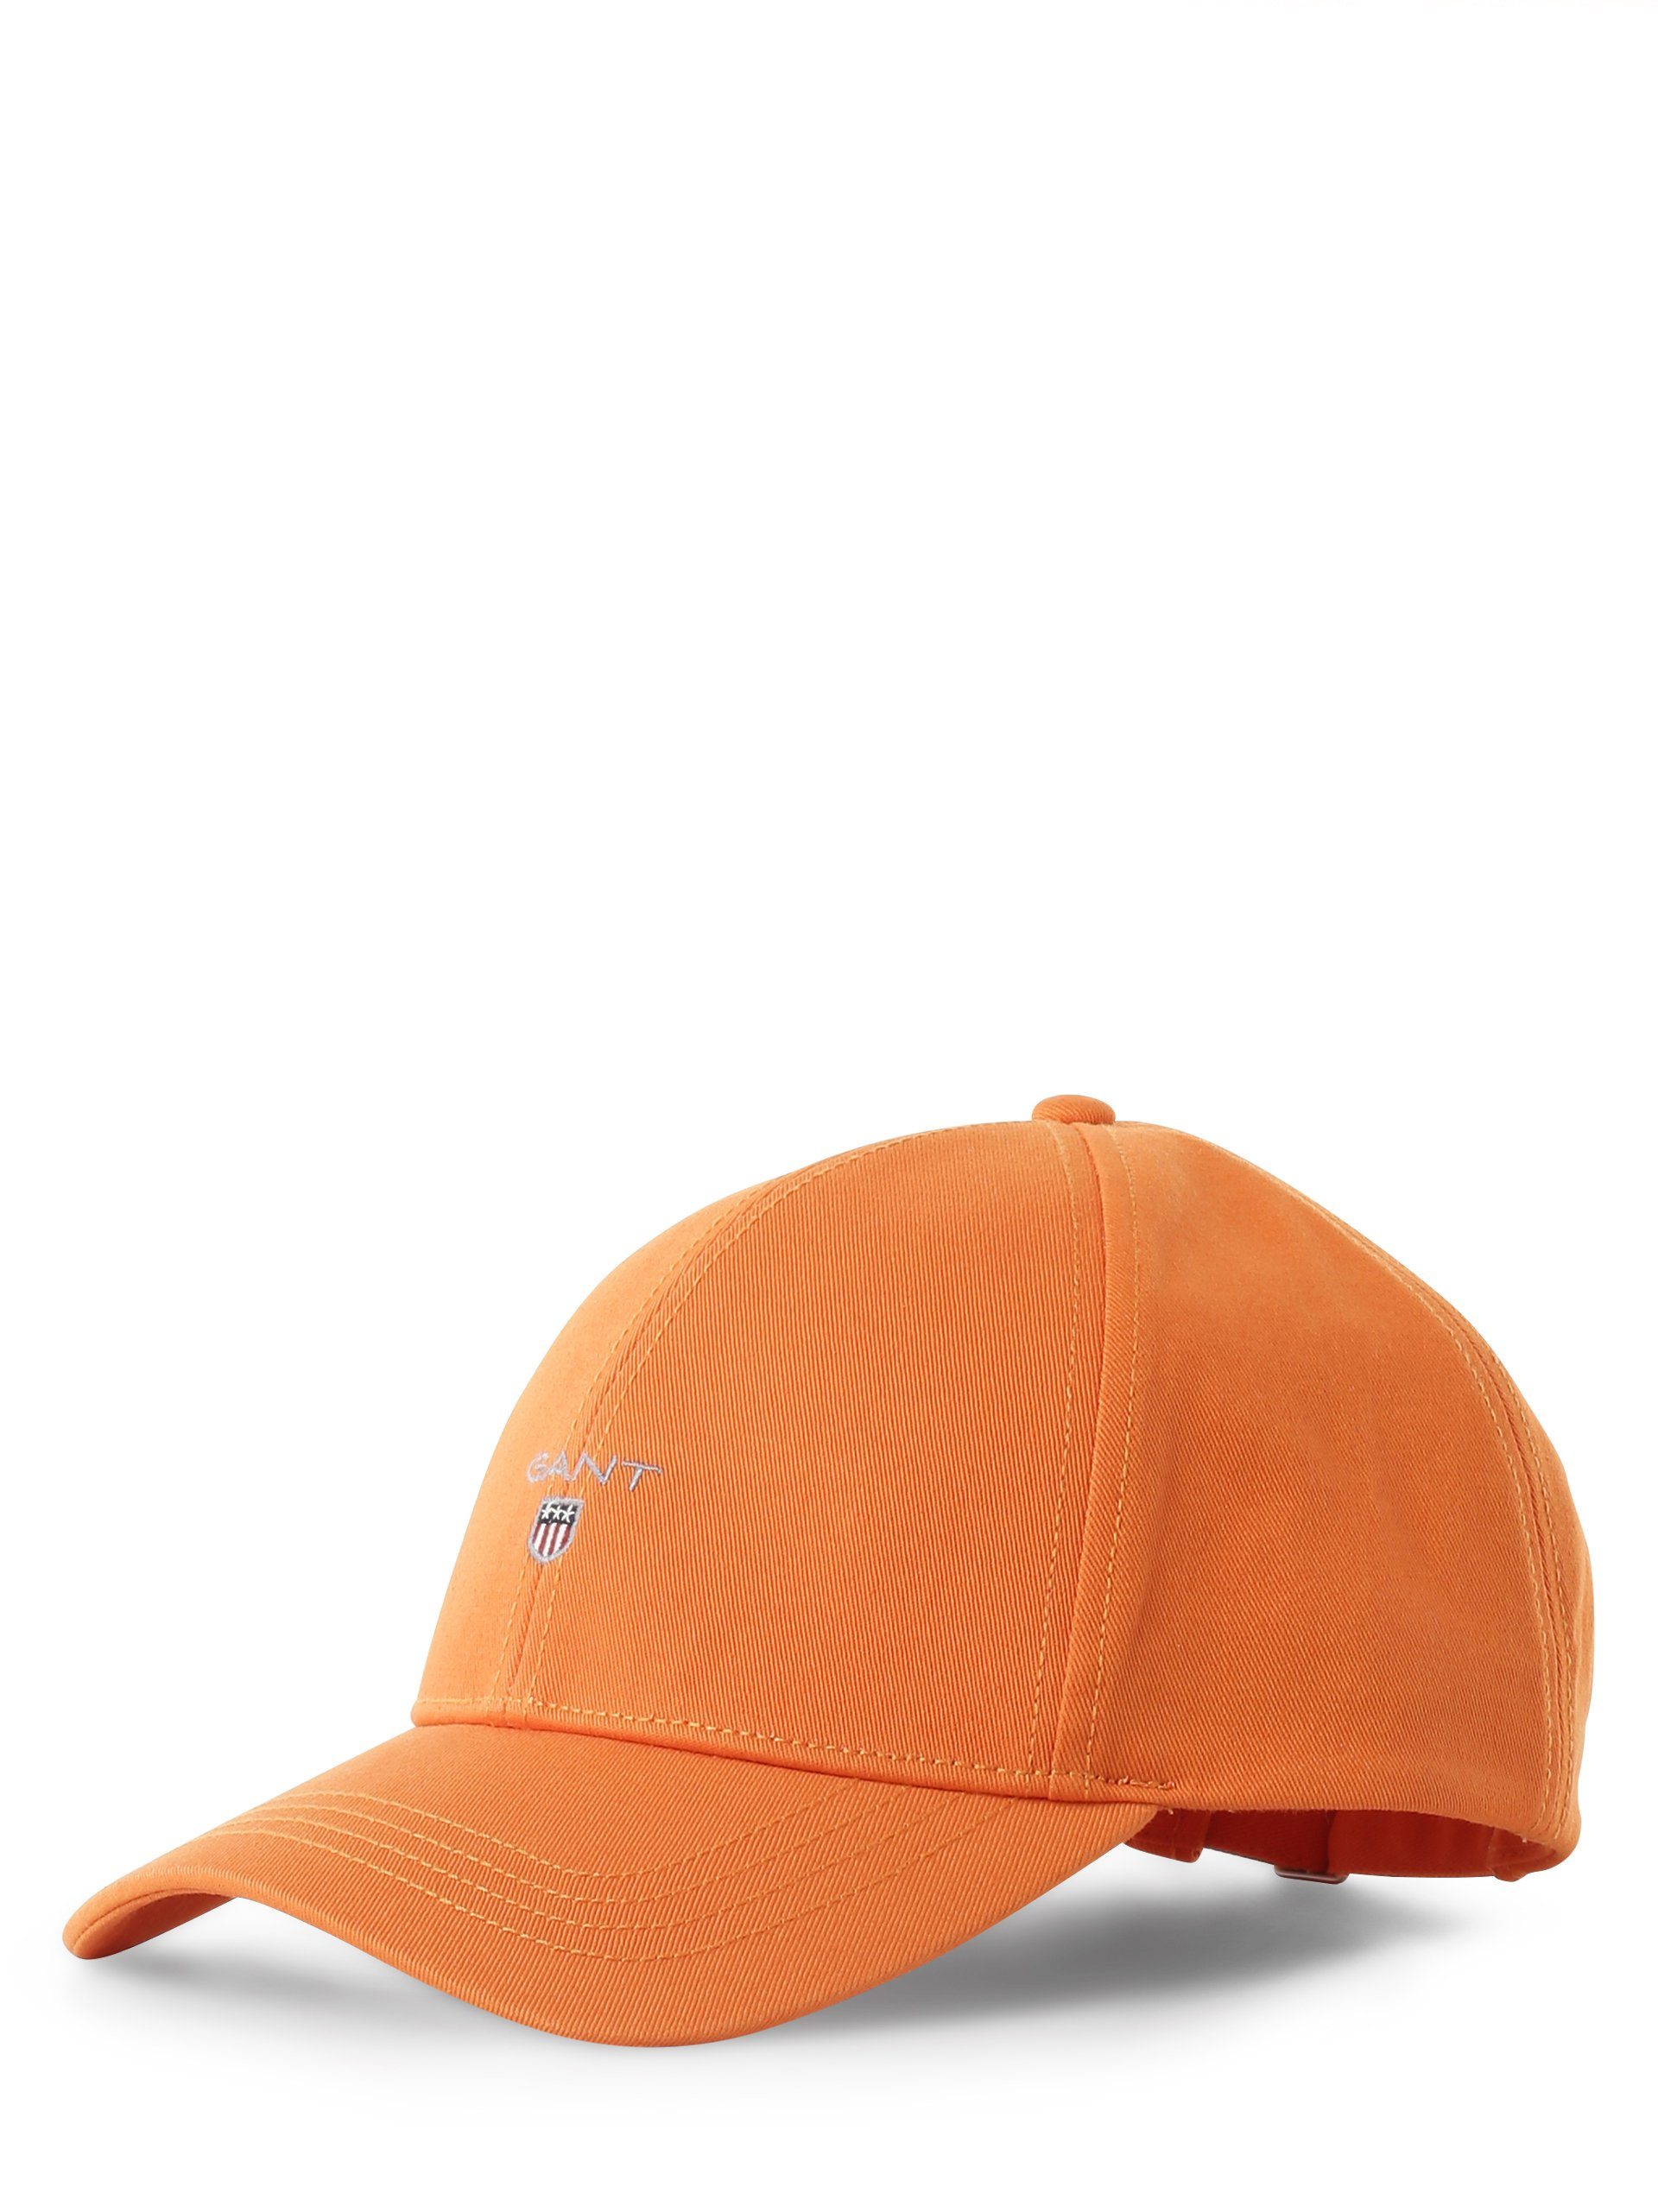 Baseball Gant Cap orange